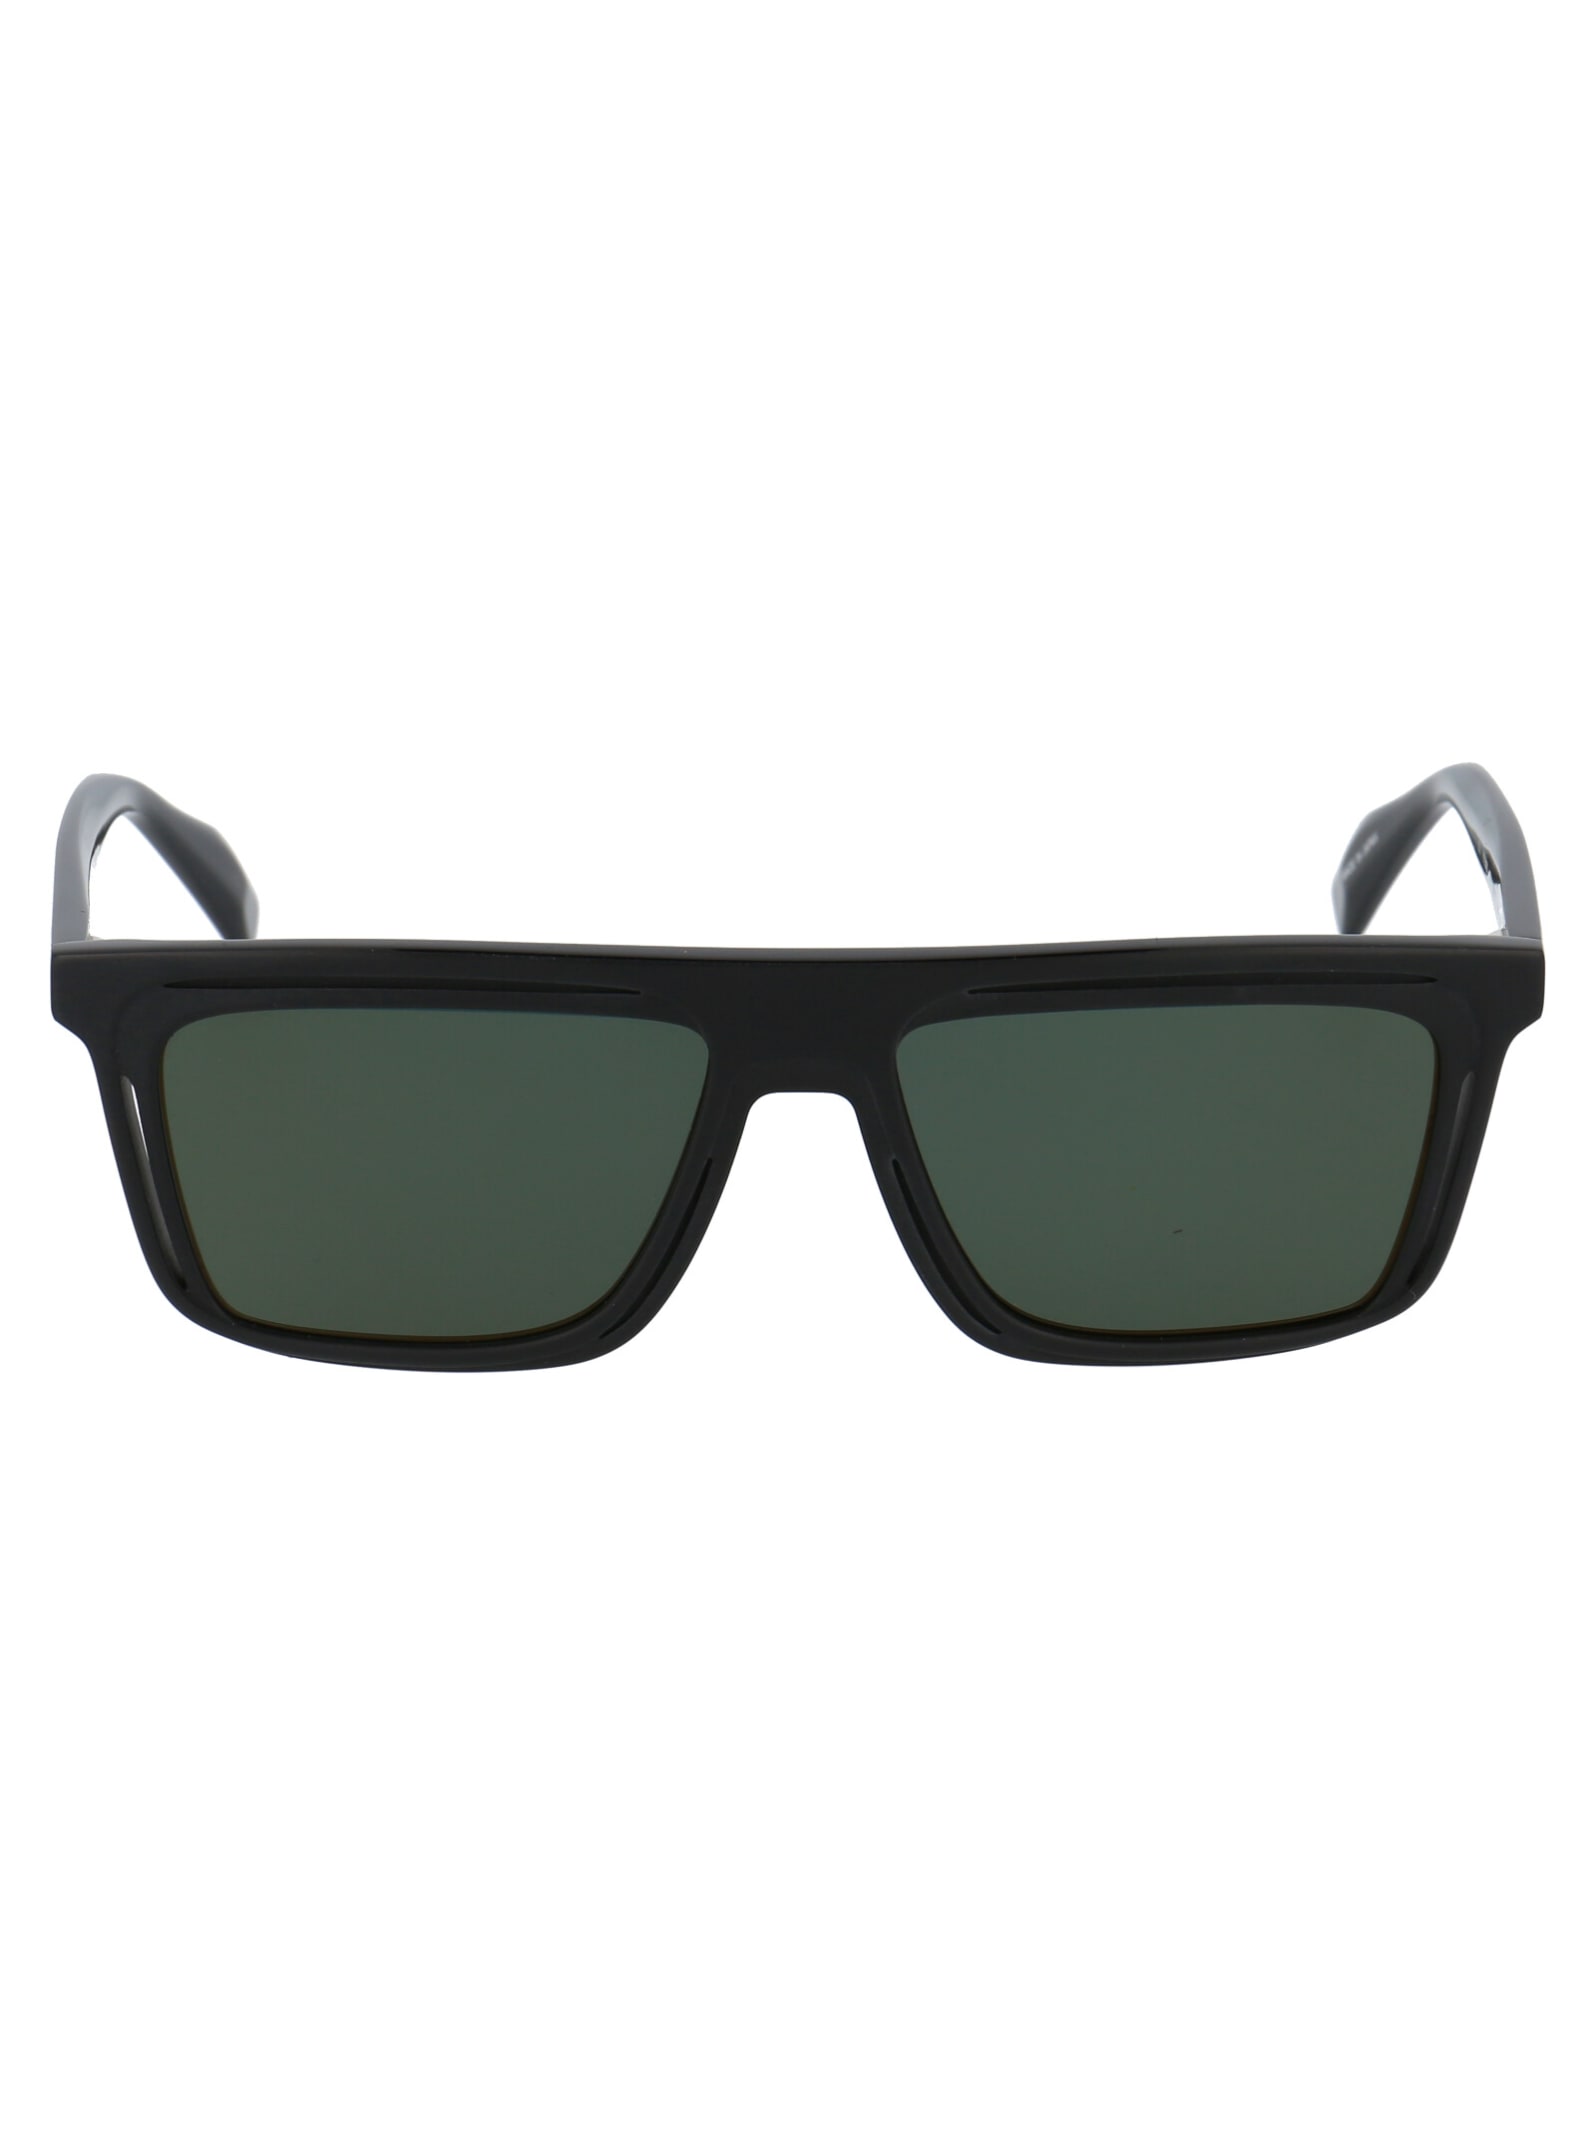 Yohji Yamamoto Yy5020 Sunglasses In 002 Black